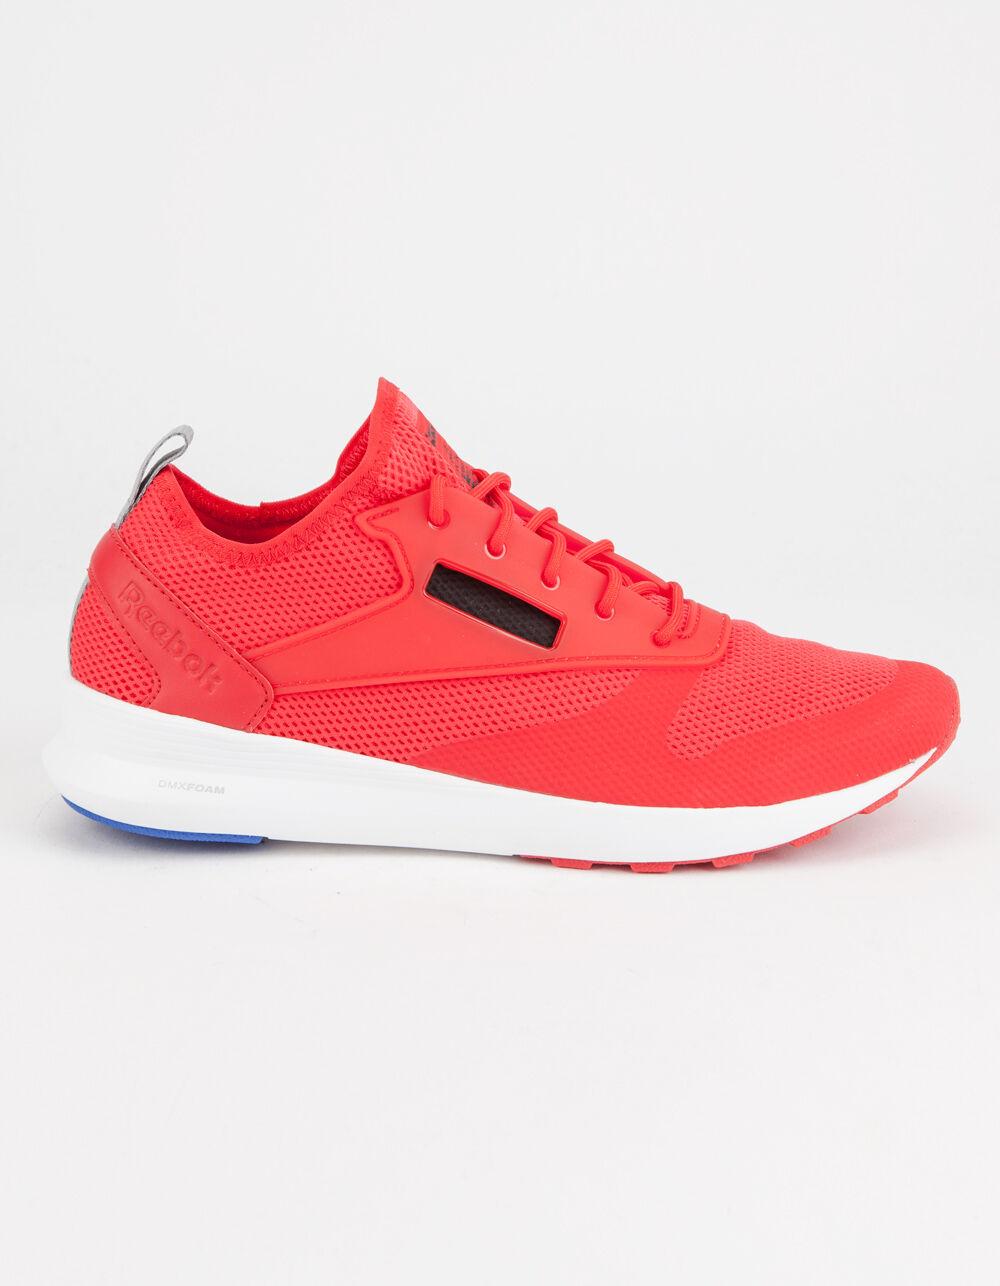 Reebok Rubber Zoku Runner Hm Sneaker in Red for Men - Save 31% - Lyst